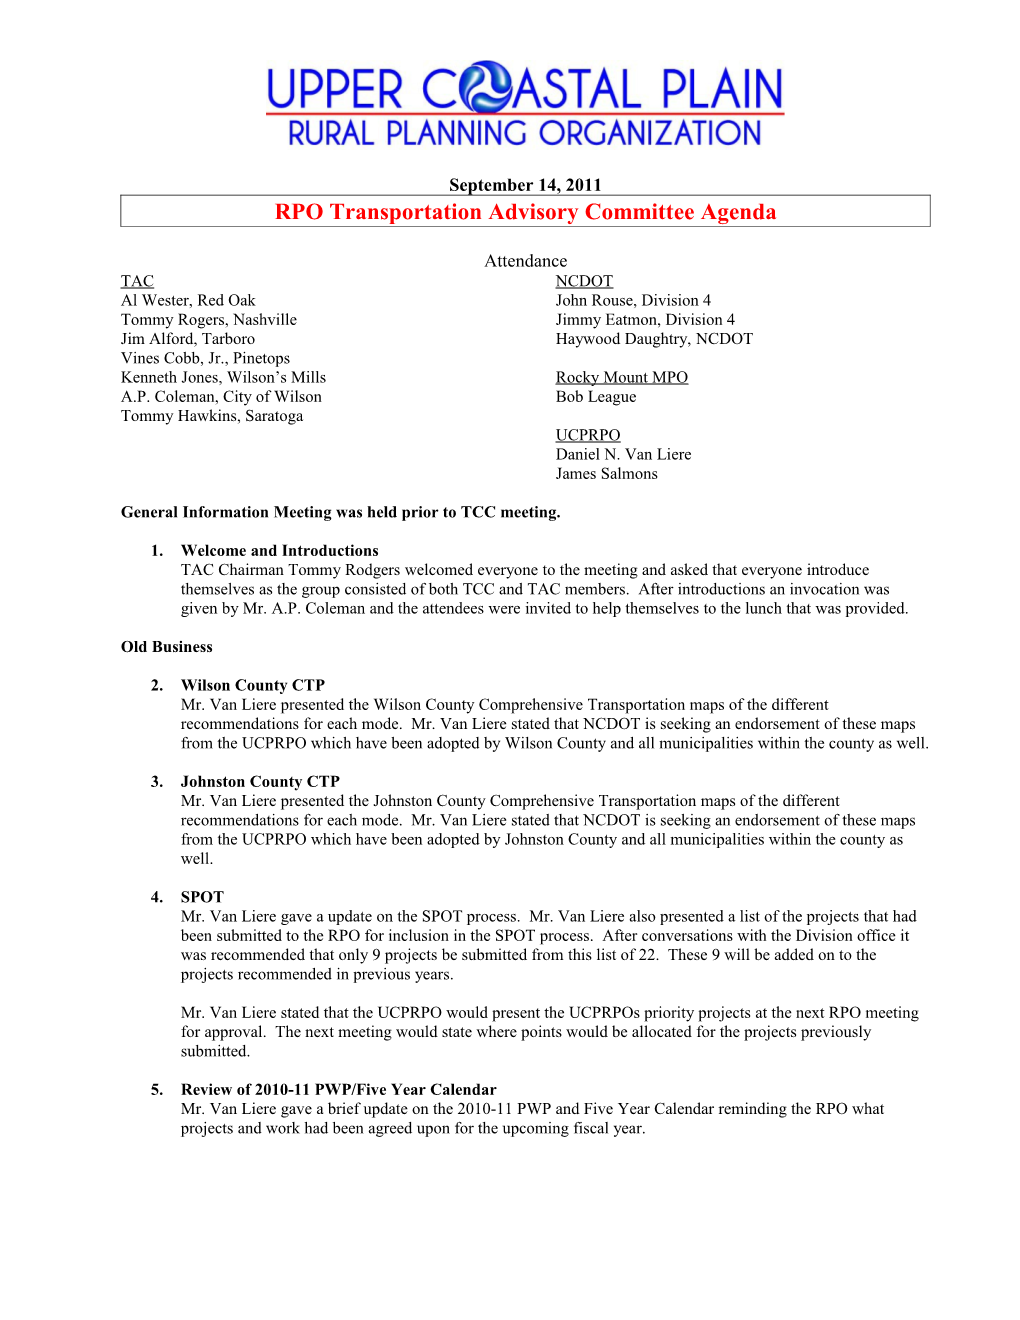 RPO Transportation Advisory Committee Agenda